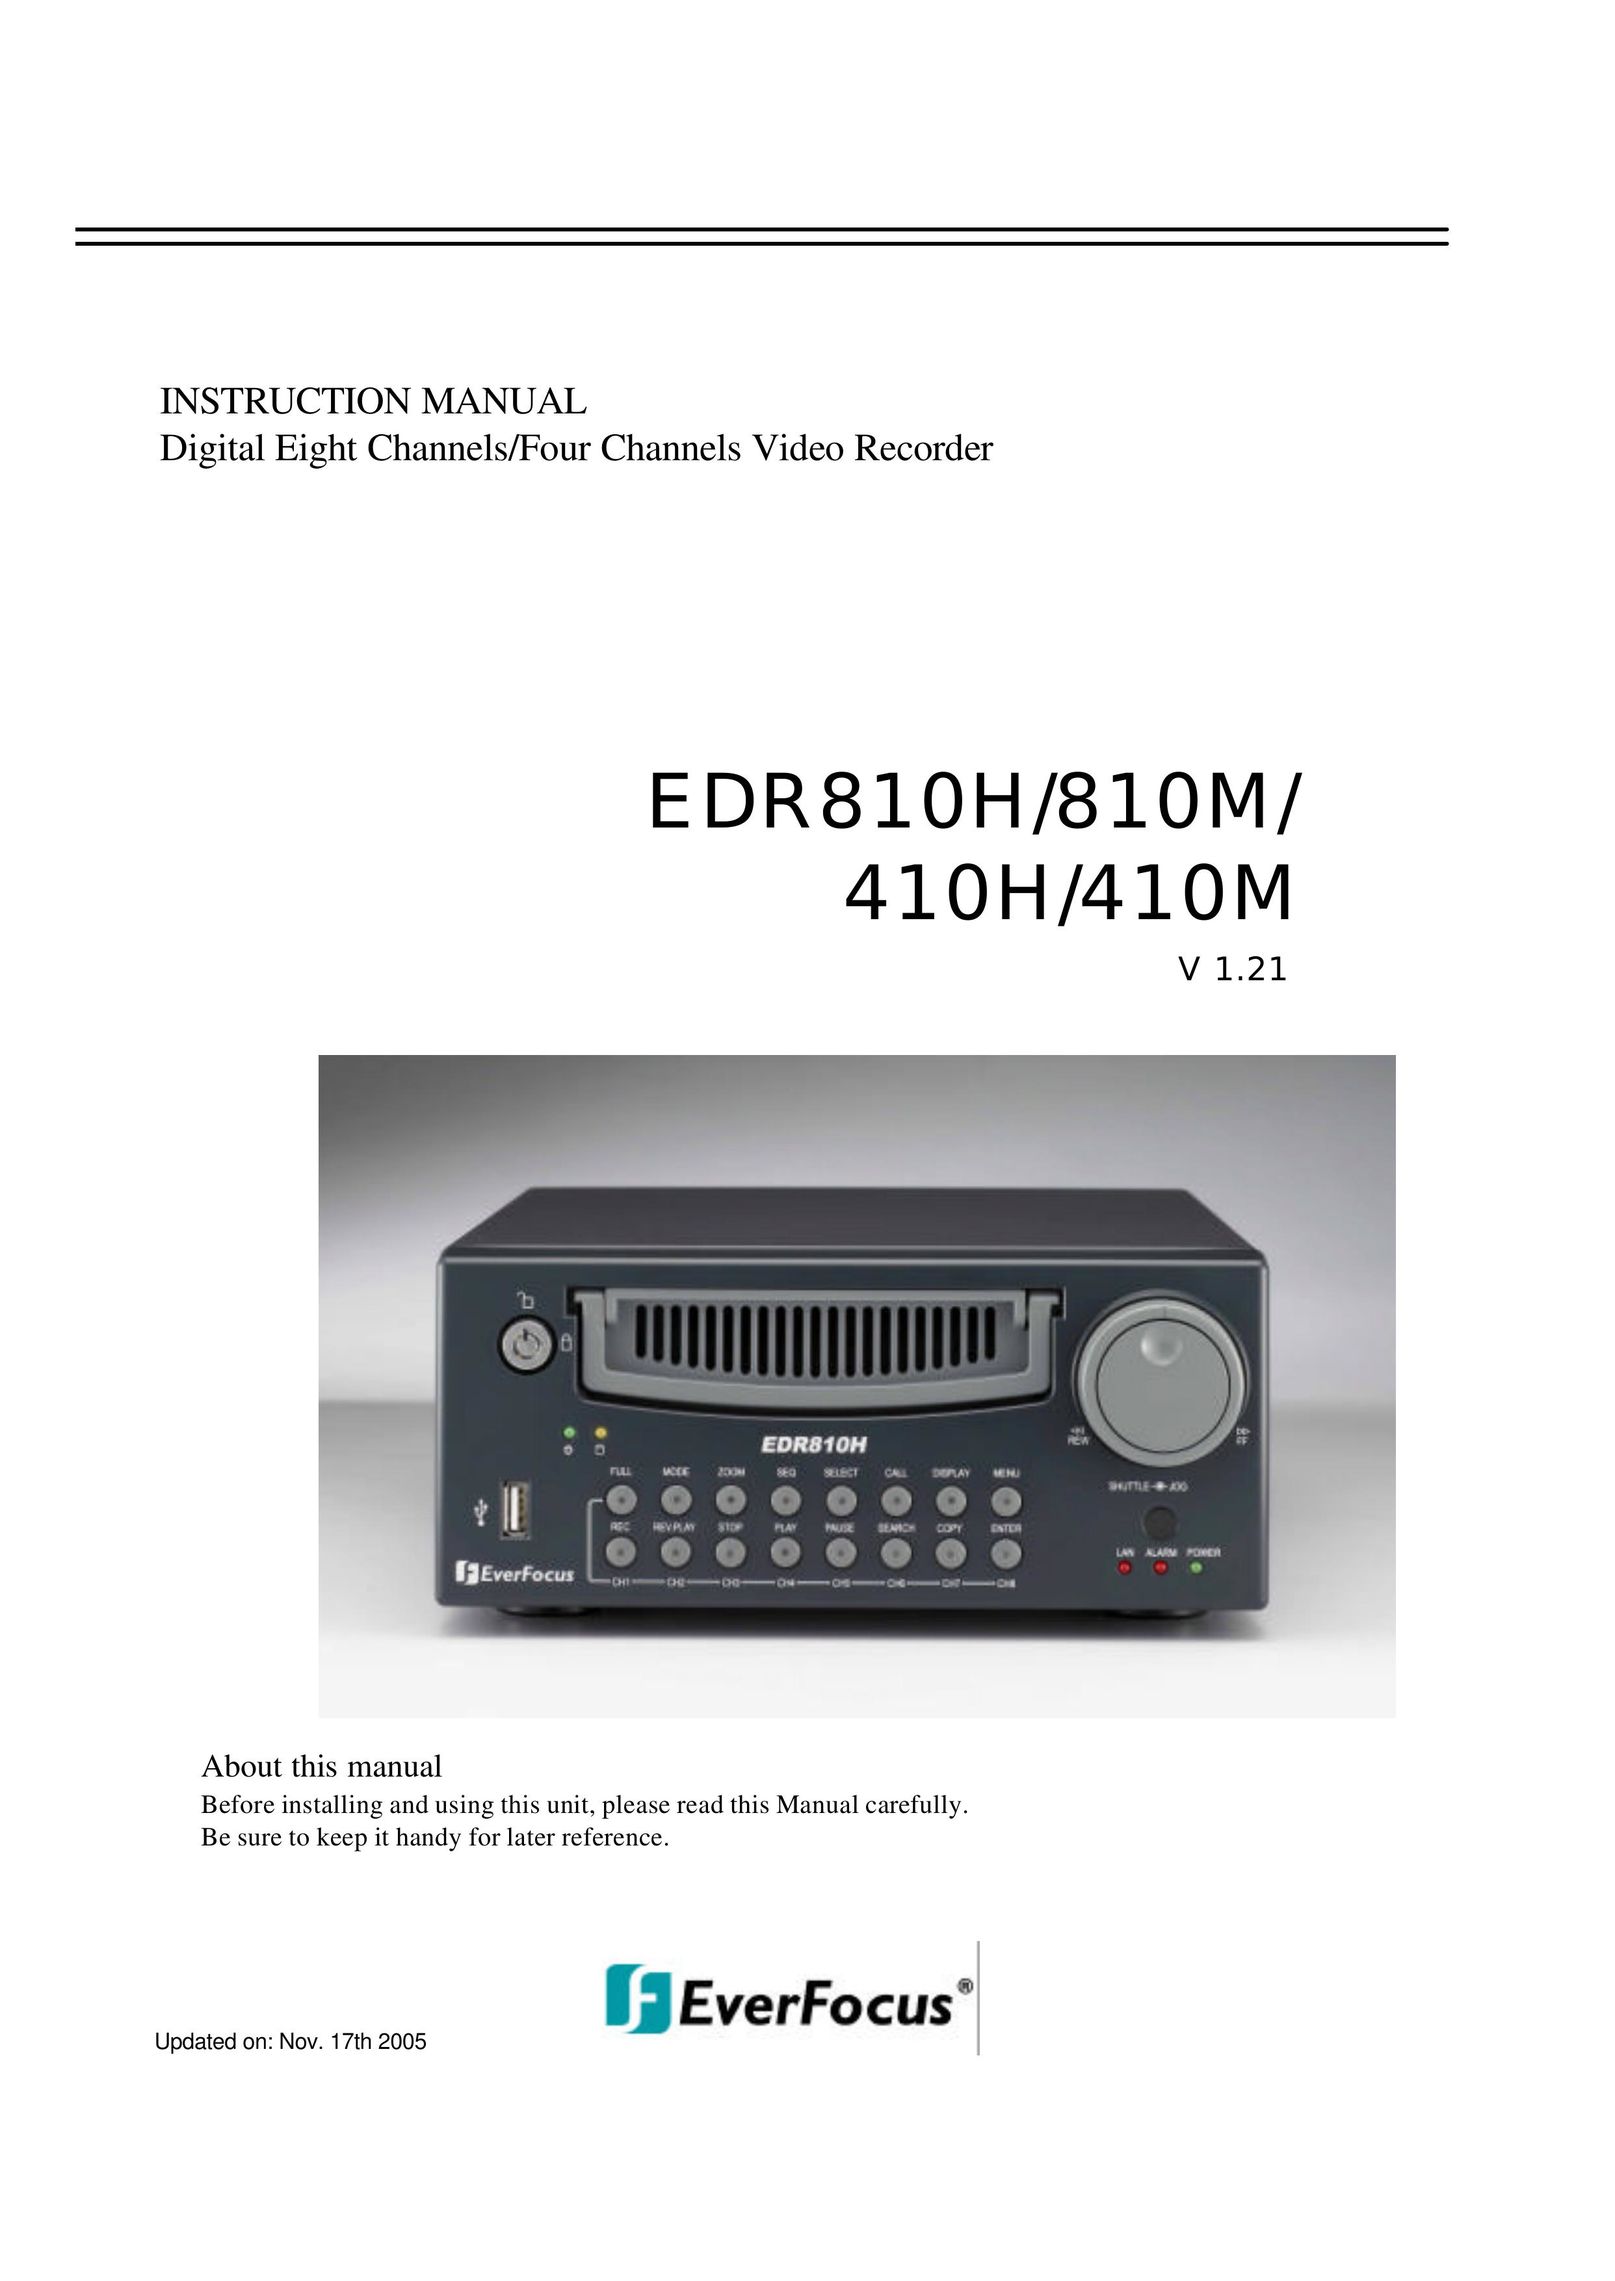 EverFocus 410H DVR User Manual